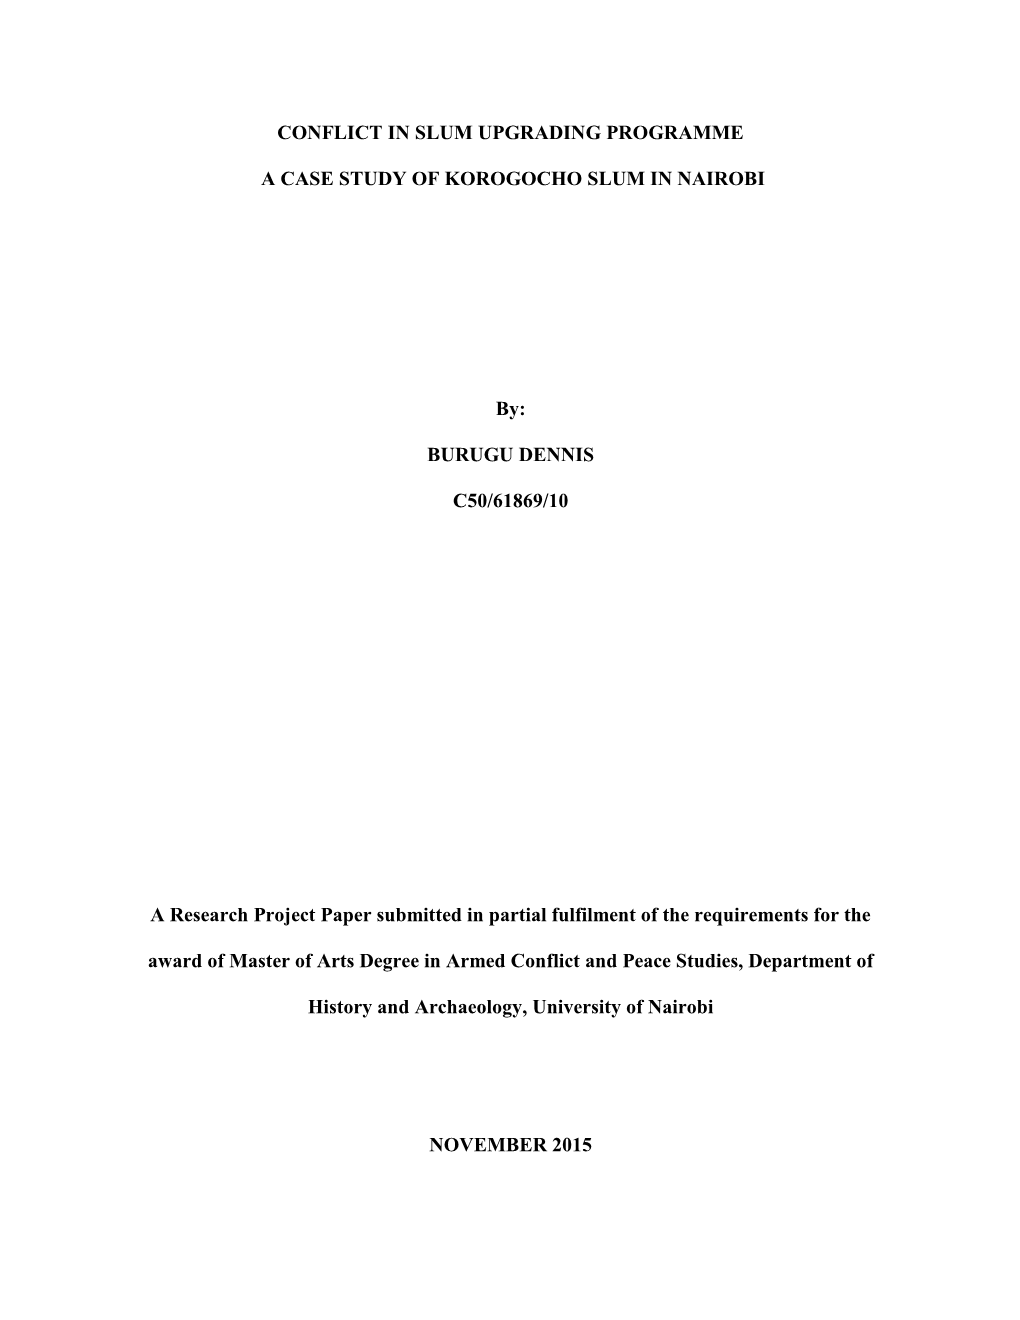 CONFLICT in SLUM UPGRADING PROGRAMME a CASE STUDY of KOROGOCHO SLUM in NAIROBI By: BURUGU DENNIS C50/61869/10 a Research Project